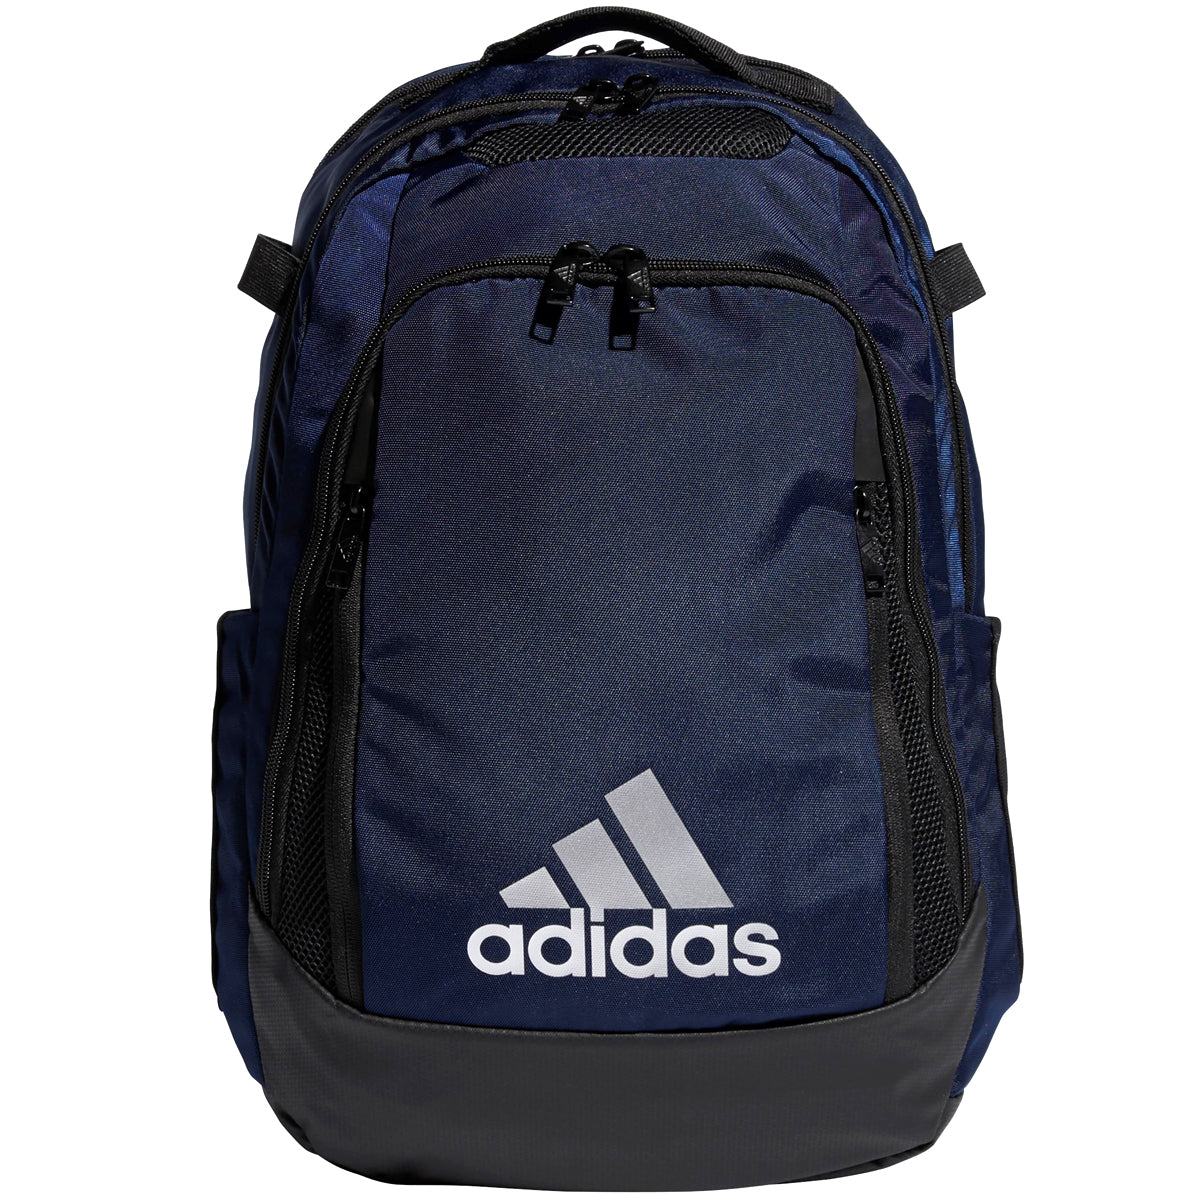 adidas Unisex-Adult 5-Star Team Backpack Bags Adidas OSFA Team Navy Blue 